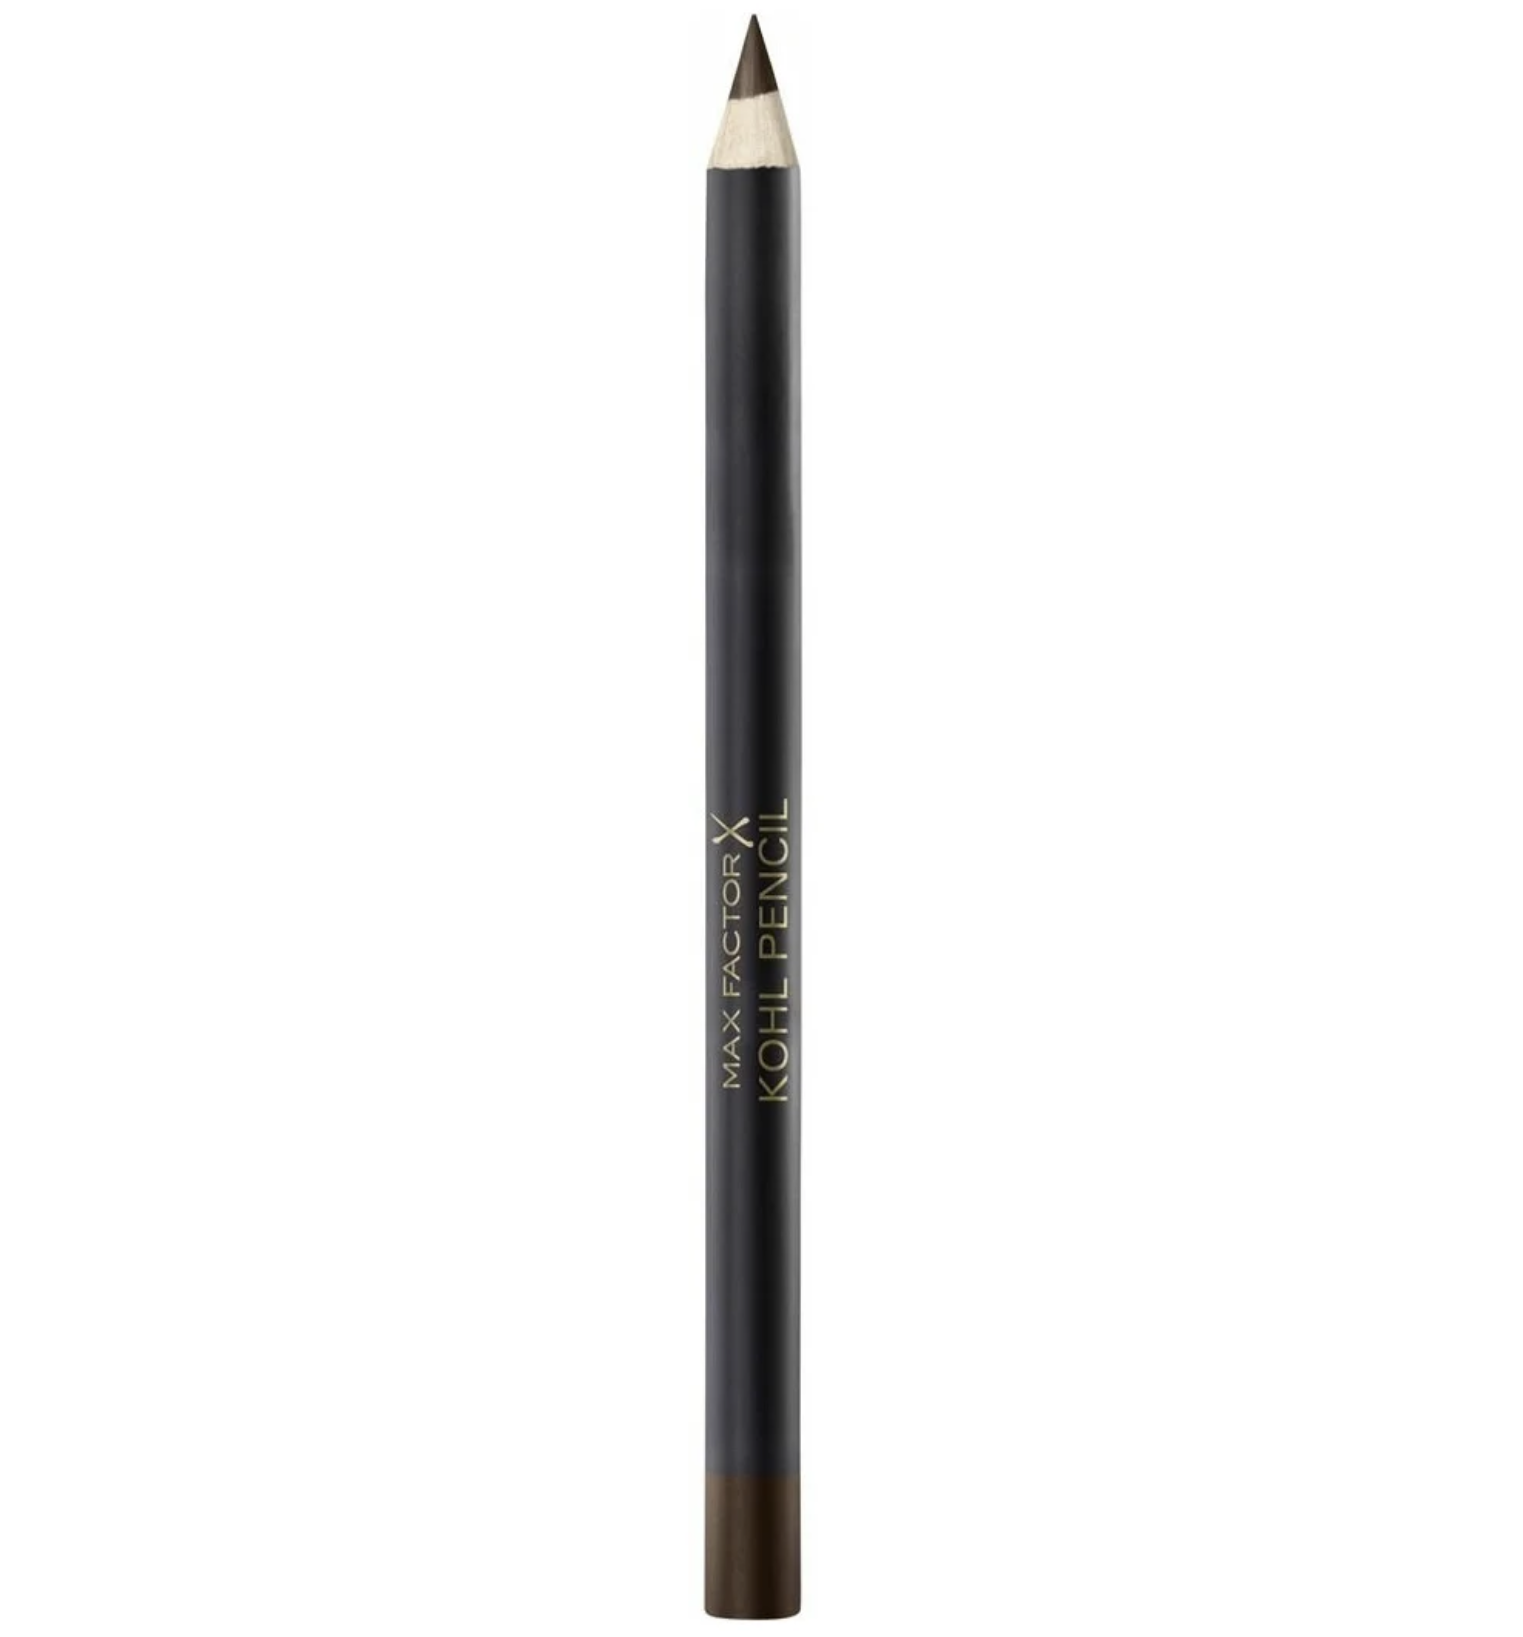 Карандаш каял. Catrice карандаш для глаз Kohl Kajal. Essence карандаш для глаз Kajal Pencil. Диваж пастель карандаш для глаз. Карандаш Диваж 3301.